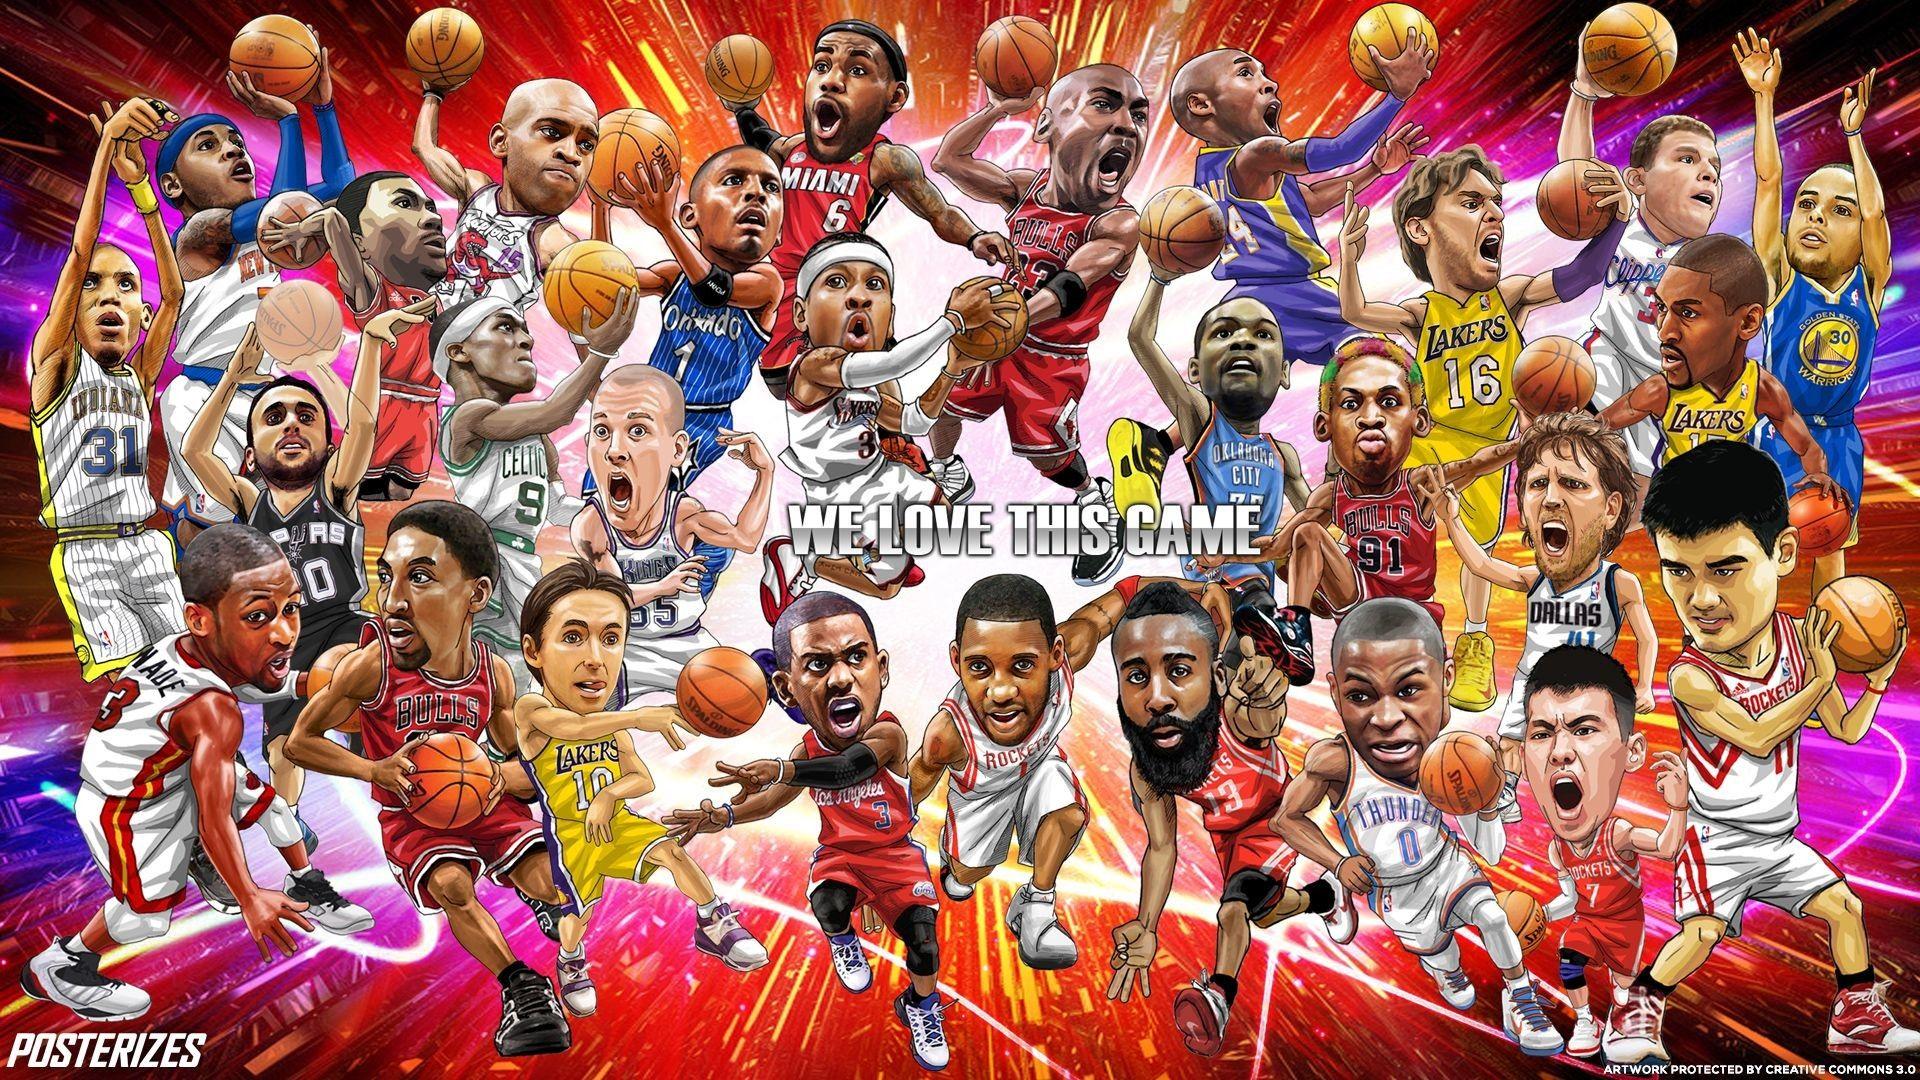 Basketball Player wallpaper wallpaper free download 1366×768 NBA Players  Wallpapers (52 Wallpapers), Adorable Wallpapers